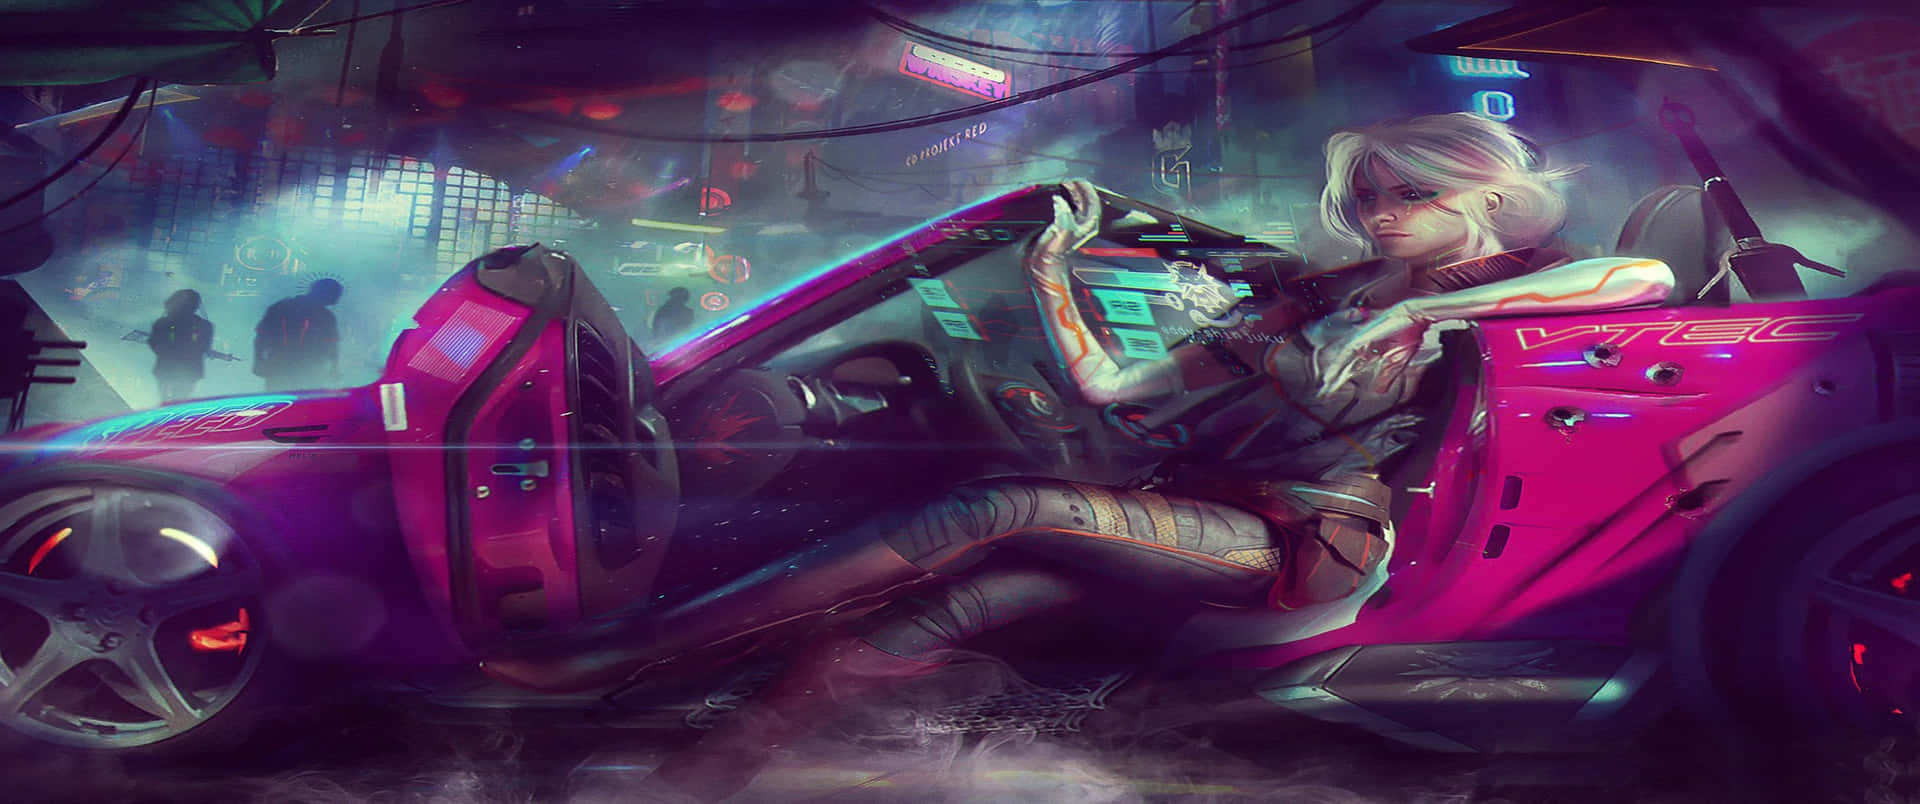 3440x1440pfondo De Pantalla De Cyberpunk 2077 Mujer En Un Automóvil Violeta.